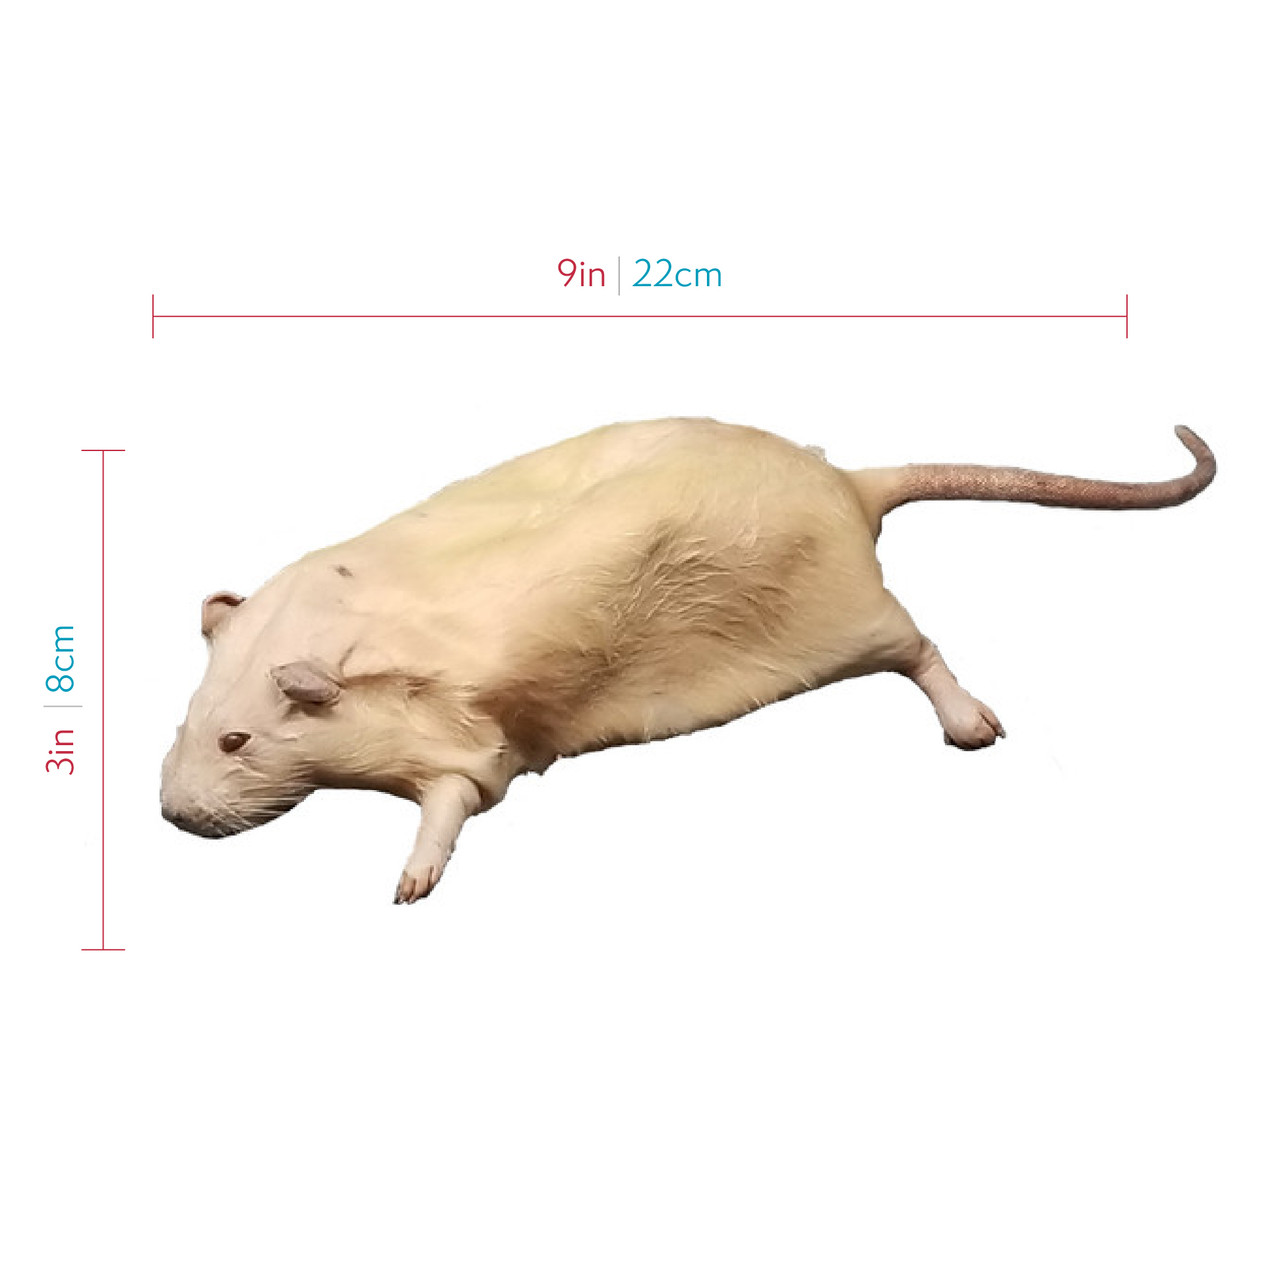 rat brain dissection diagram